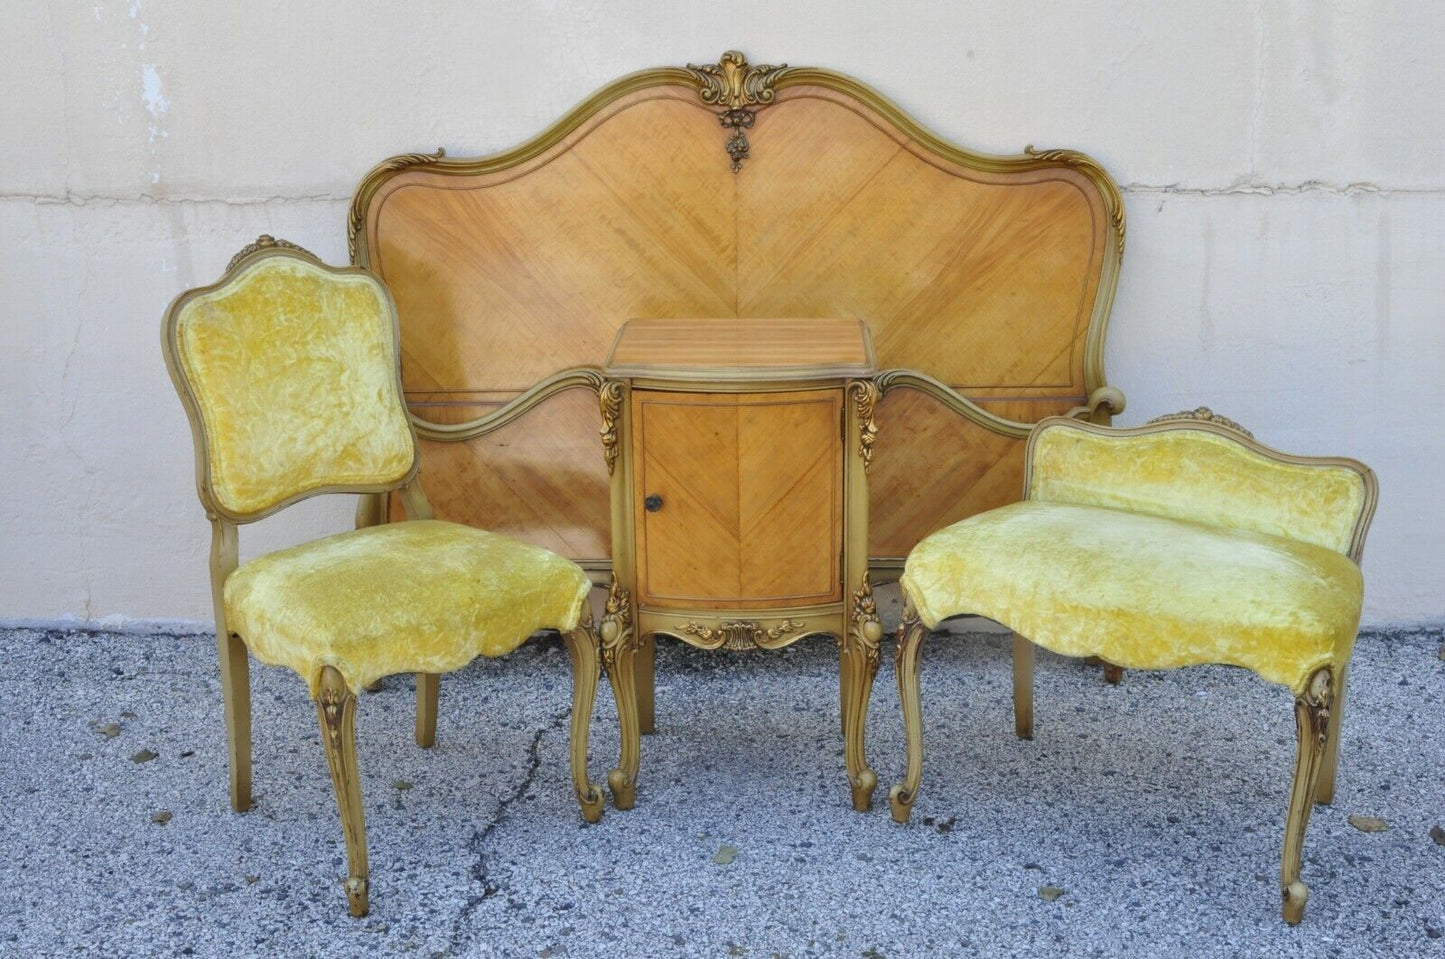 Antique French Louis XV Carved Satinwood 9 Pc Bedroom Set Dresser Vanity Mirror